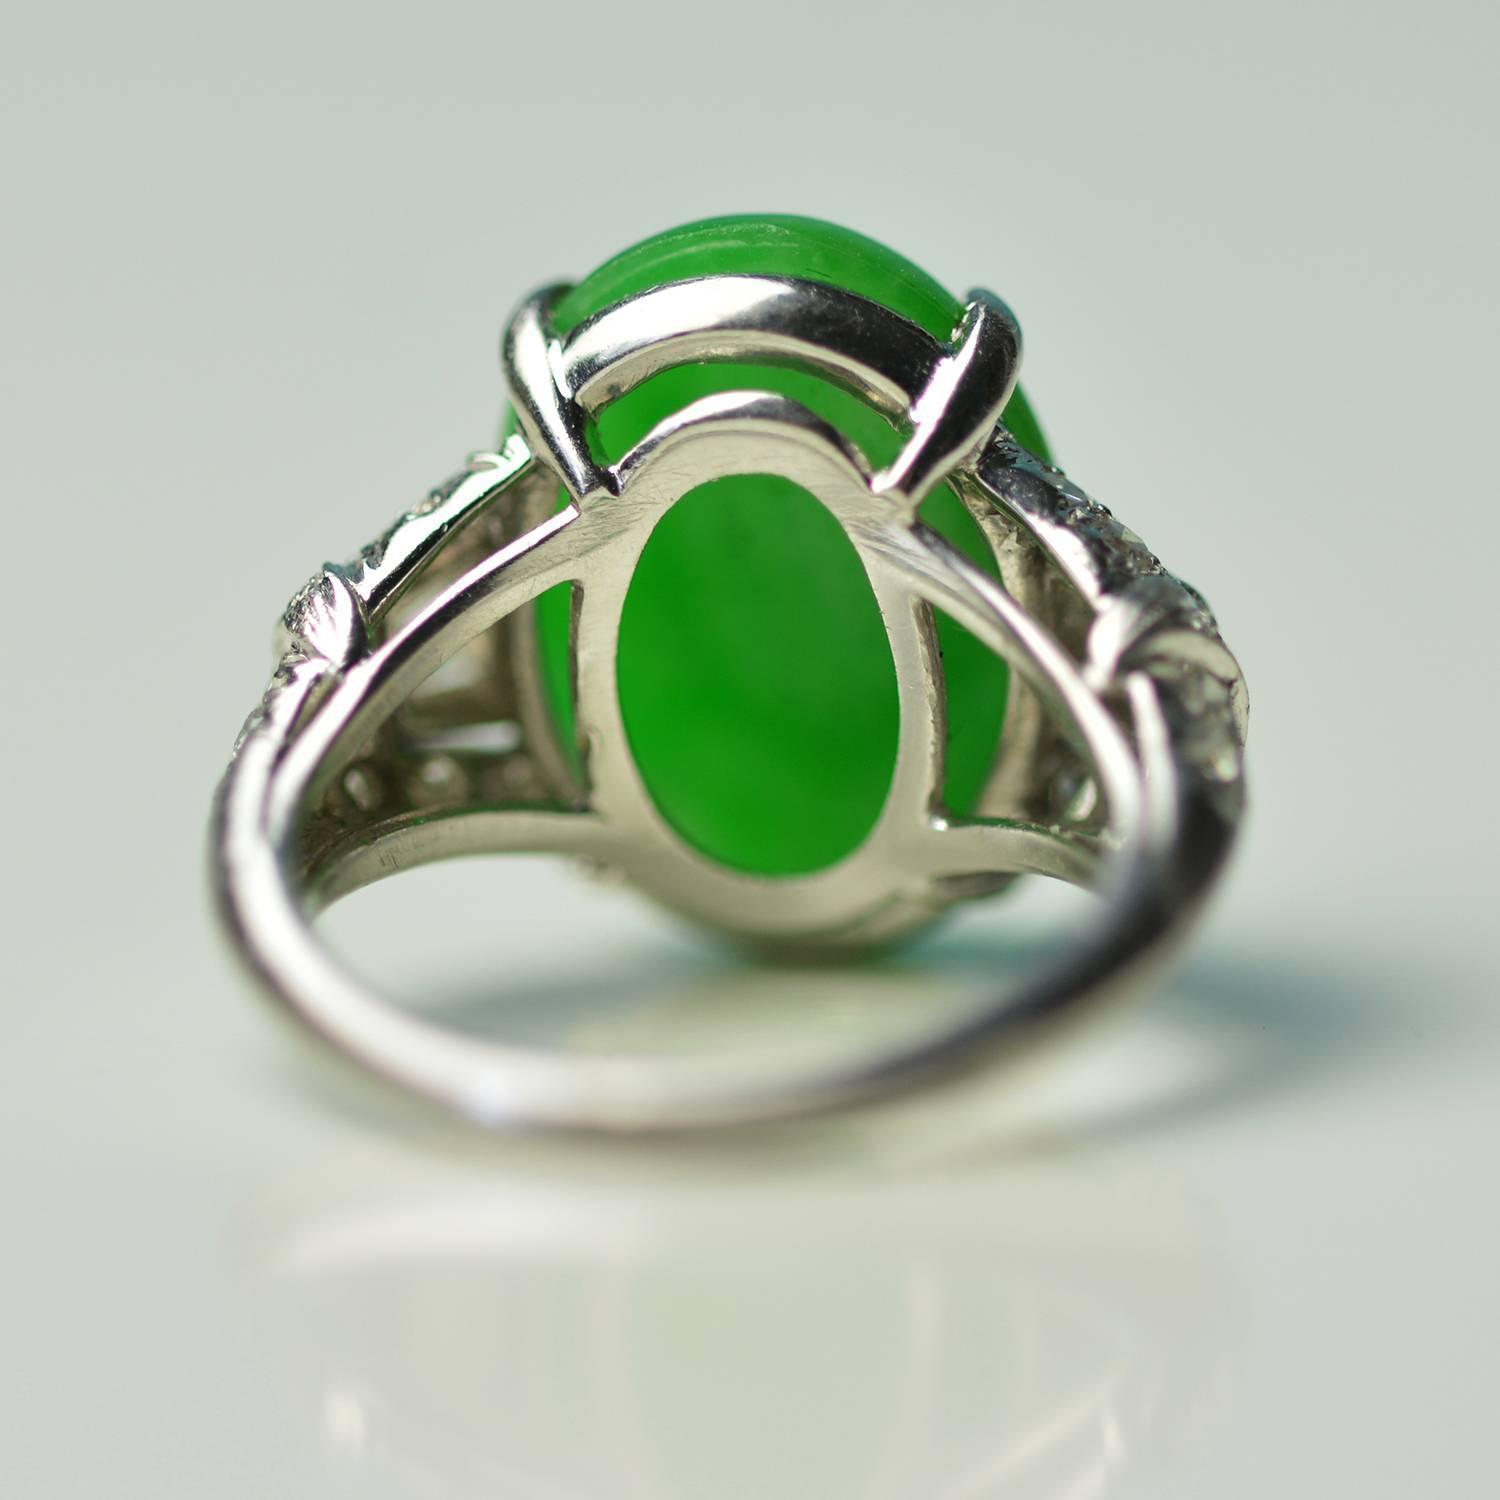 Antique Imperial Jade Platinum Ring For Sale at 1stdibs